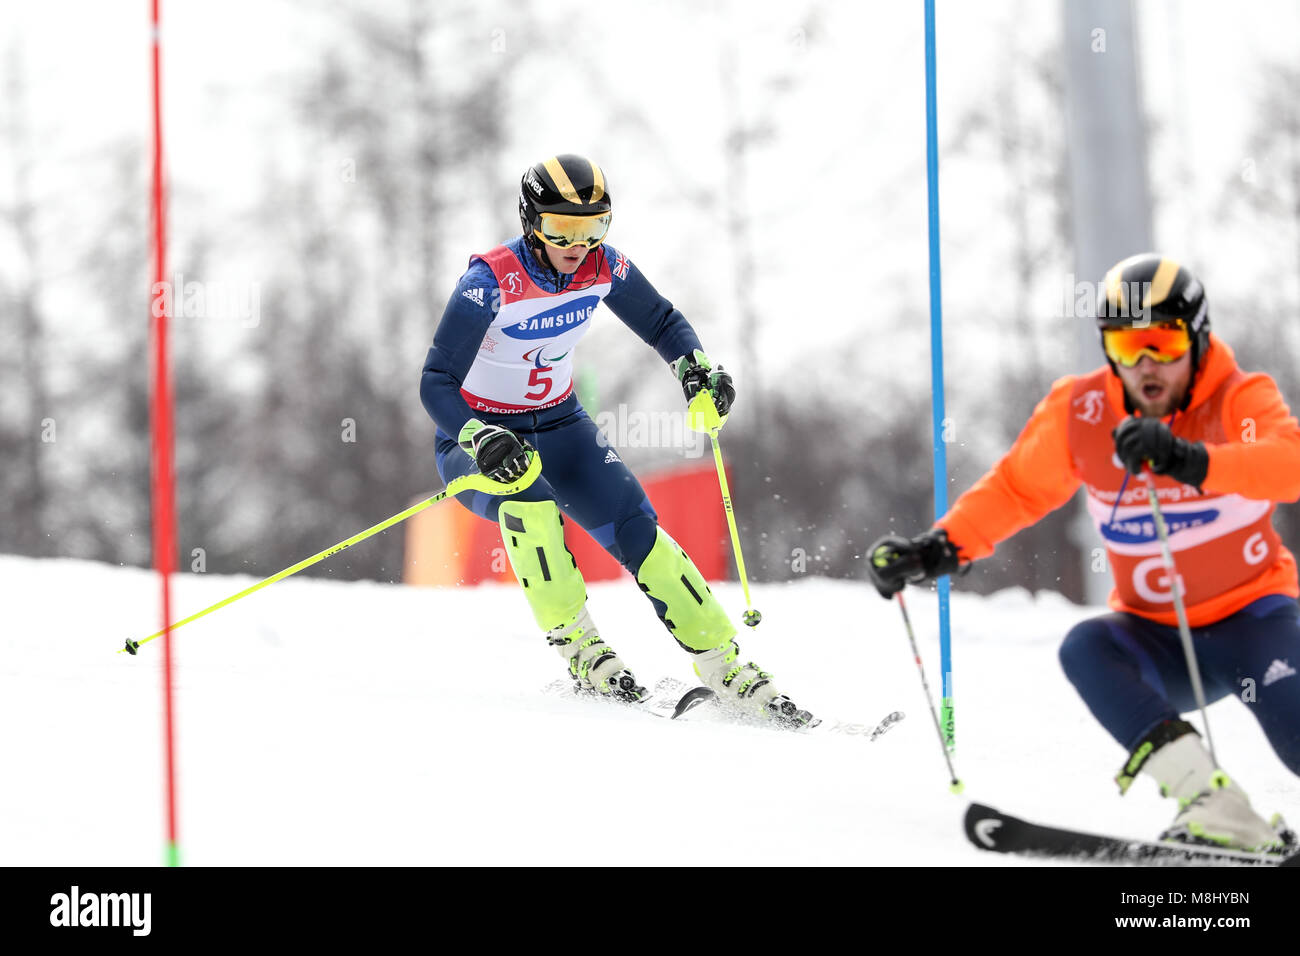 PyeongChang 18. März. Slalom der Frauen. Mannschaft GB - Ritter Millie, Guide: wilde Brett Credit: Marco Ciccolella/Alamy leben Nachrichten Stockfoto